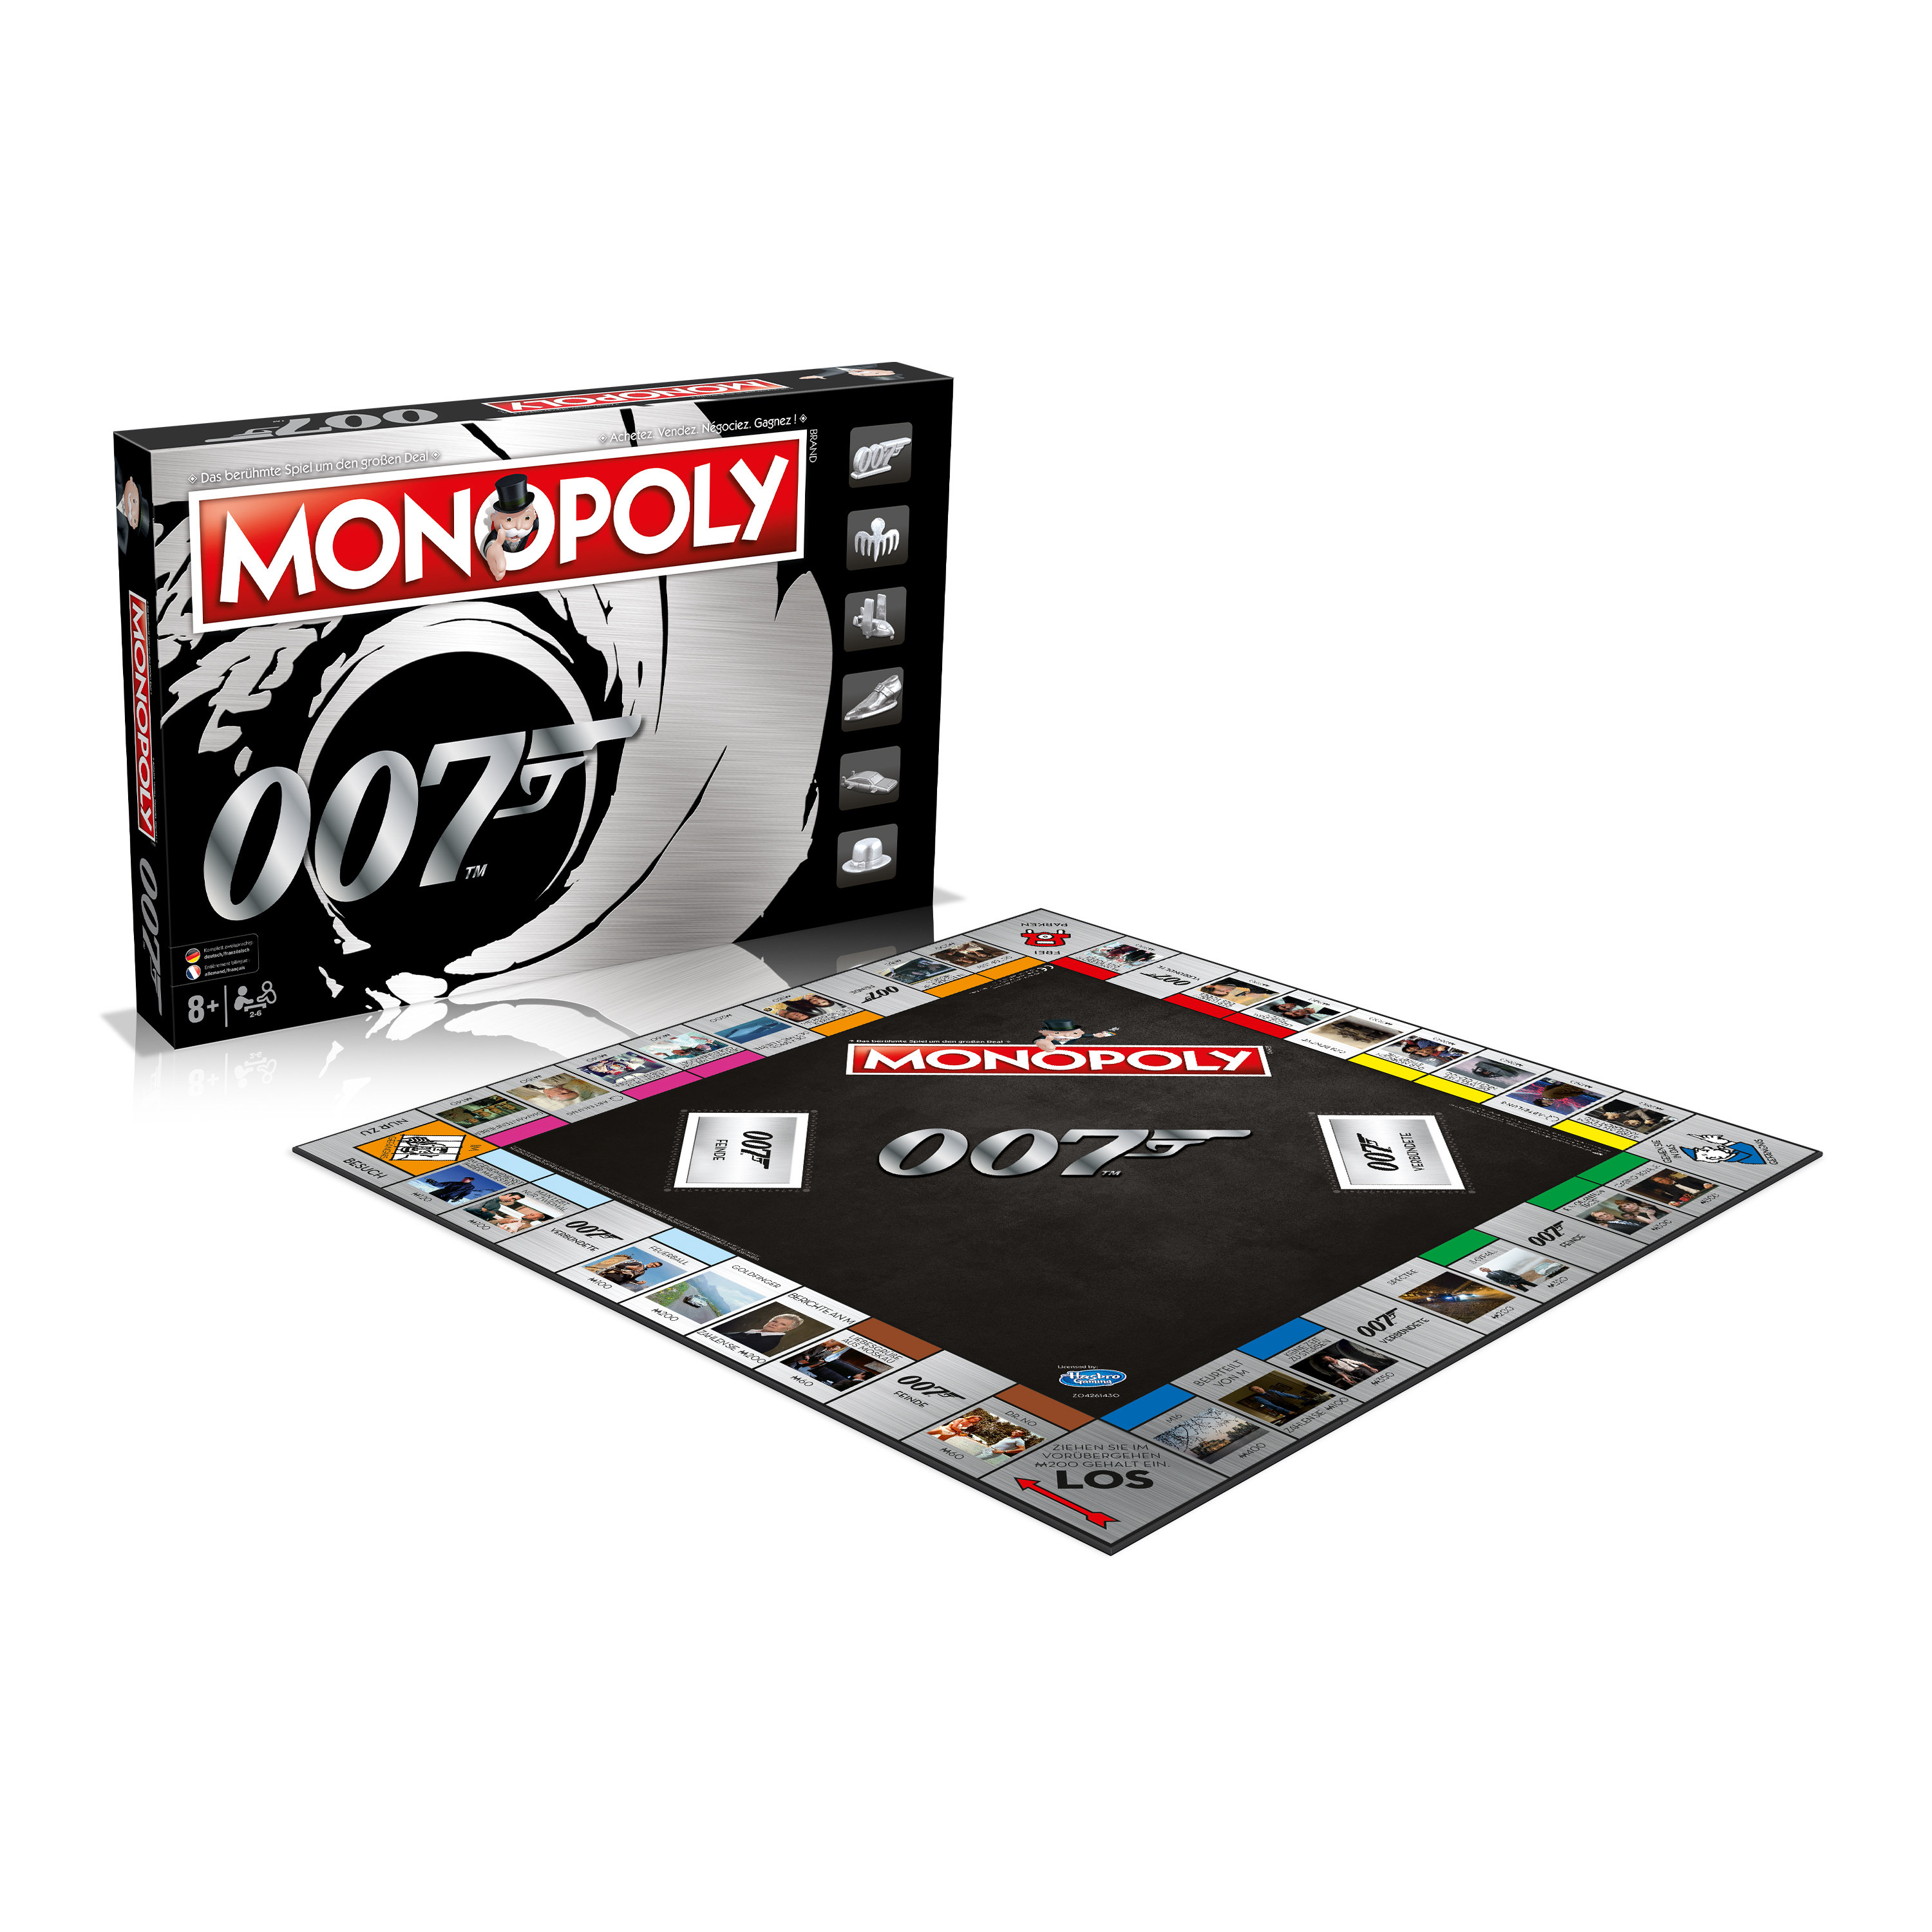 Bond James Monopoly